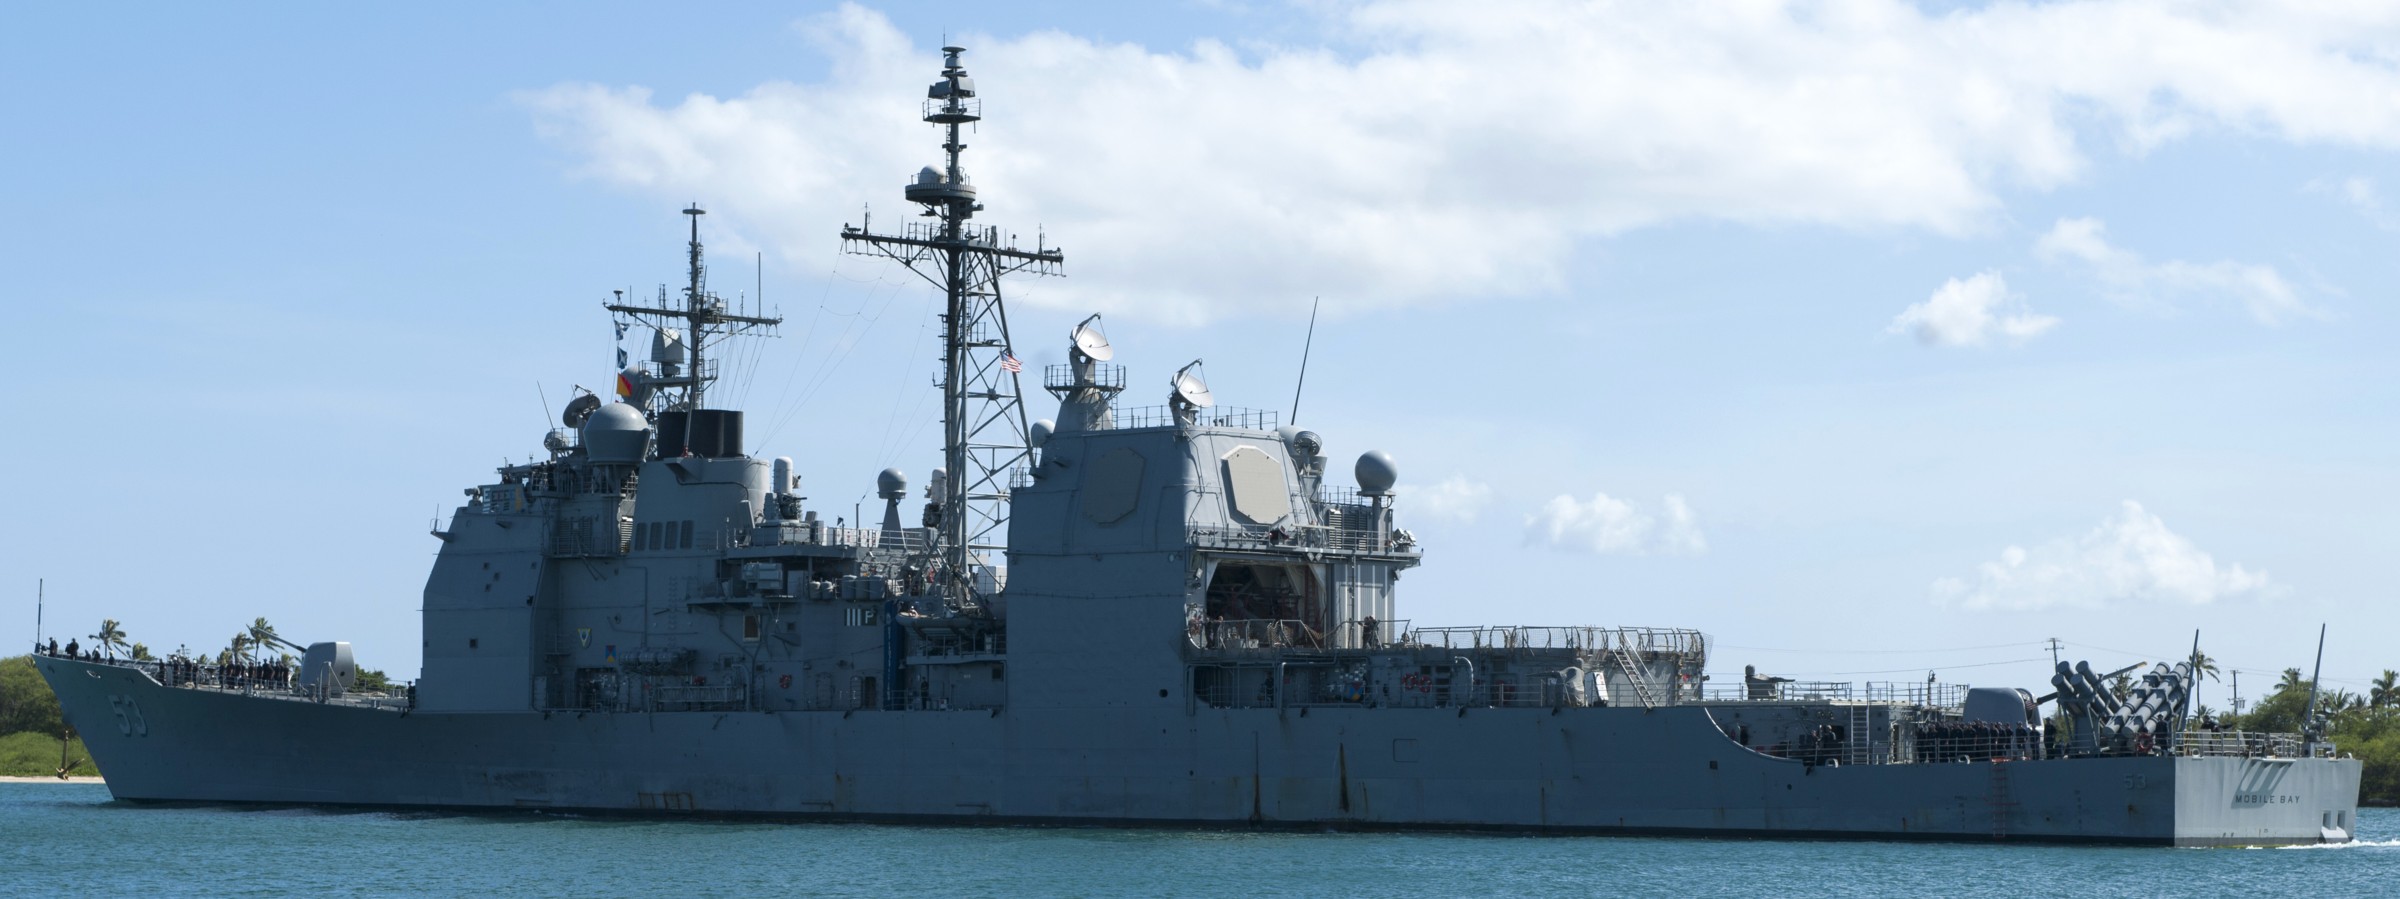 cg-53 uss mobile bay ticonderoga class guided missile cruiser aegis joint base pearl harbor hickam hawaii 98